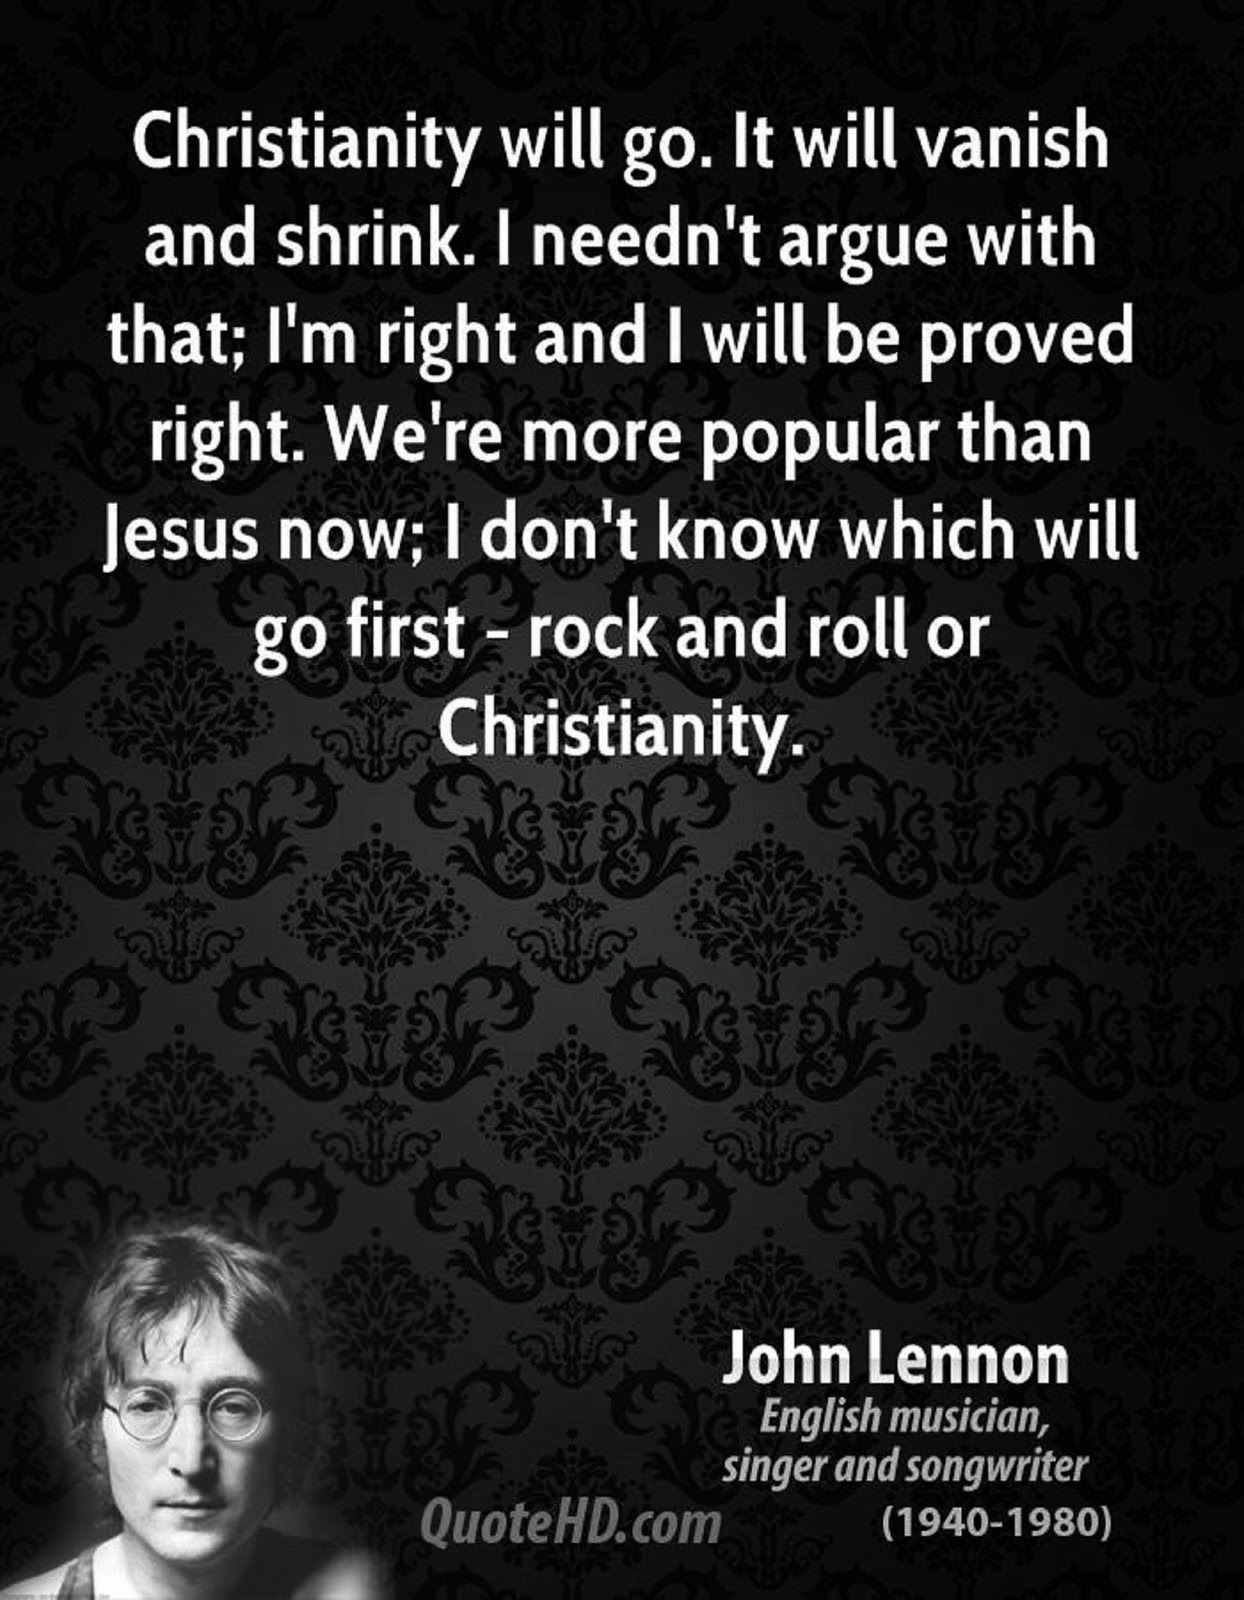 "CHRISTIANITY  WILL GO IT WILL VANISH AND SHRINK" BEATLE JOHN LENNON